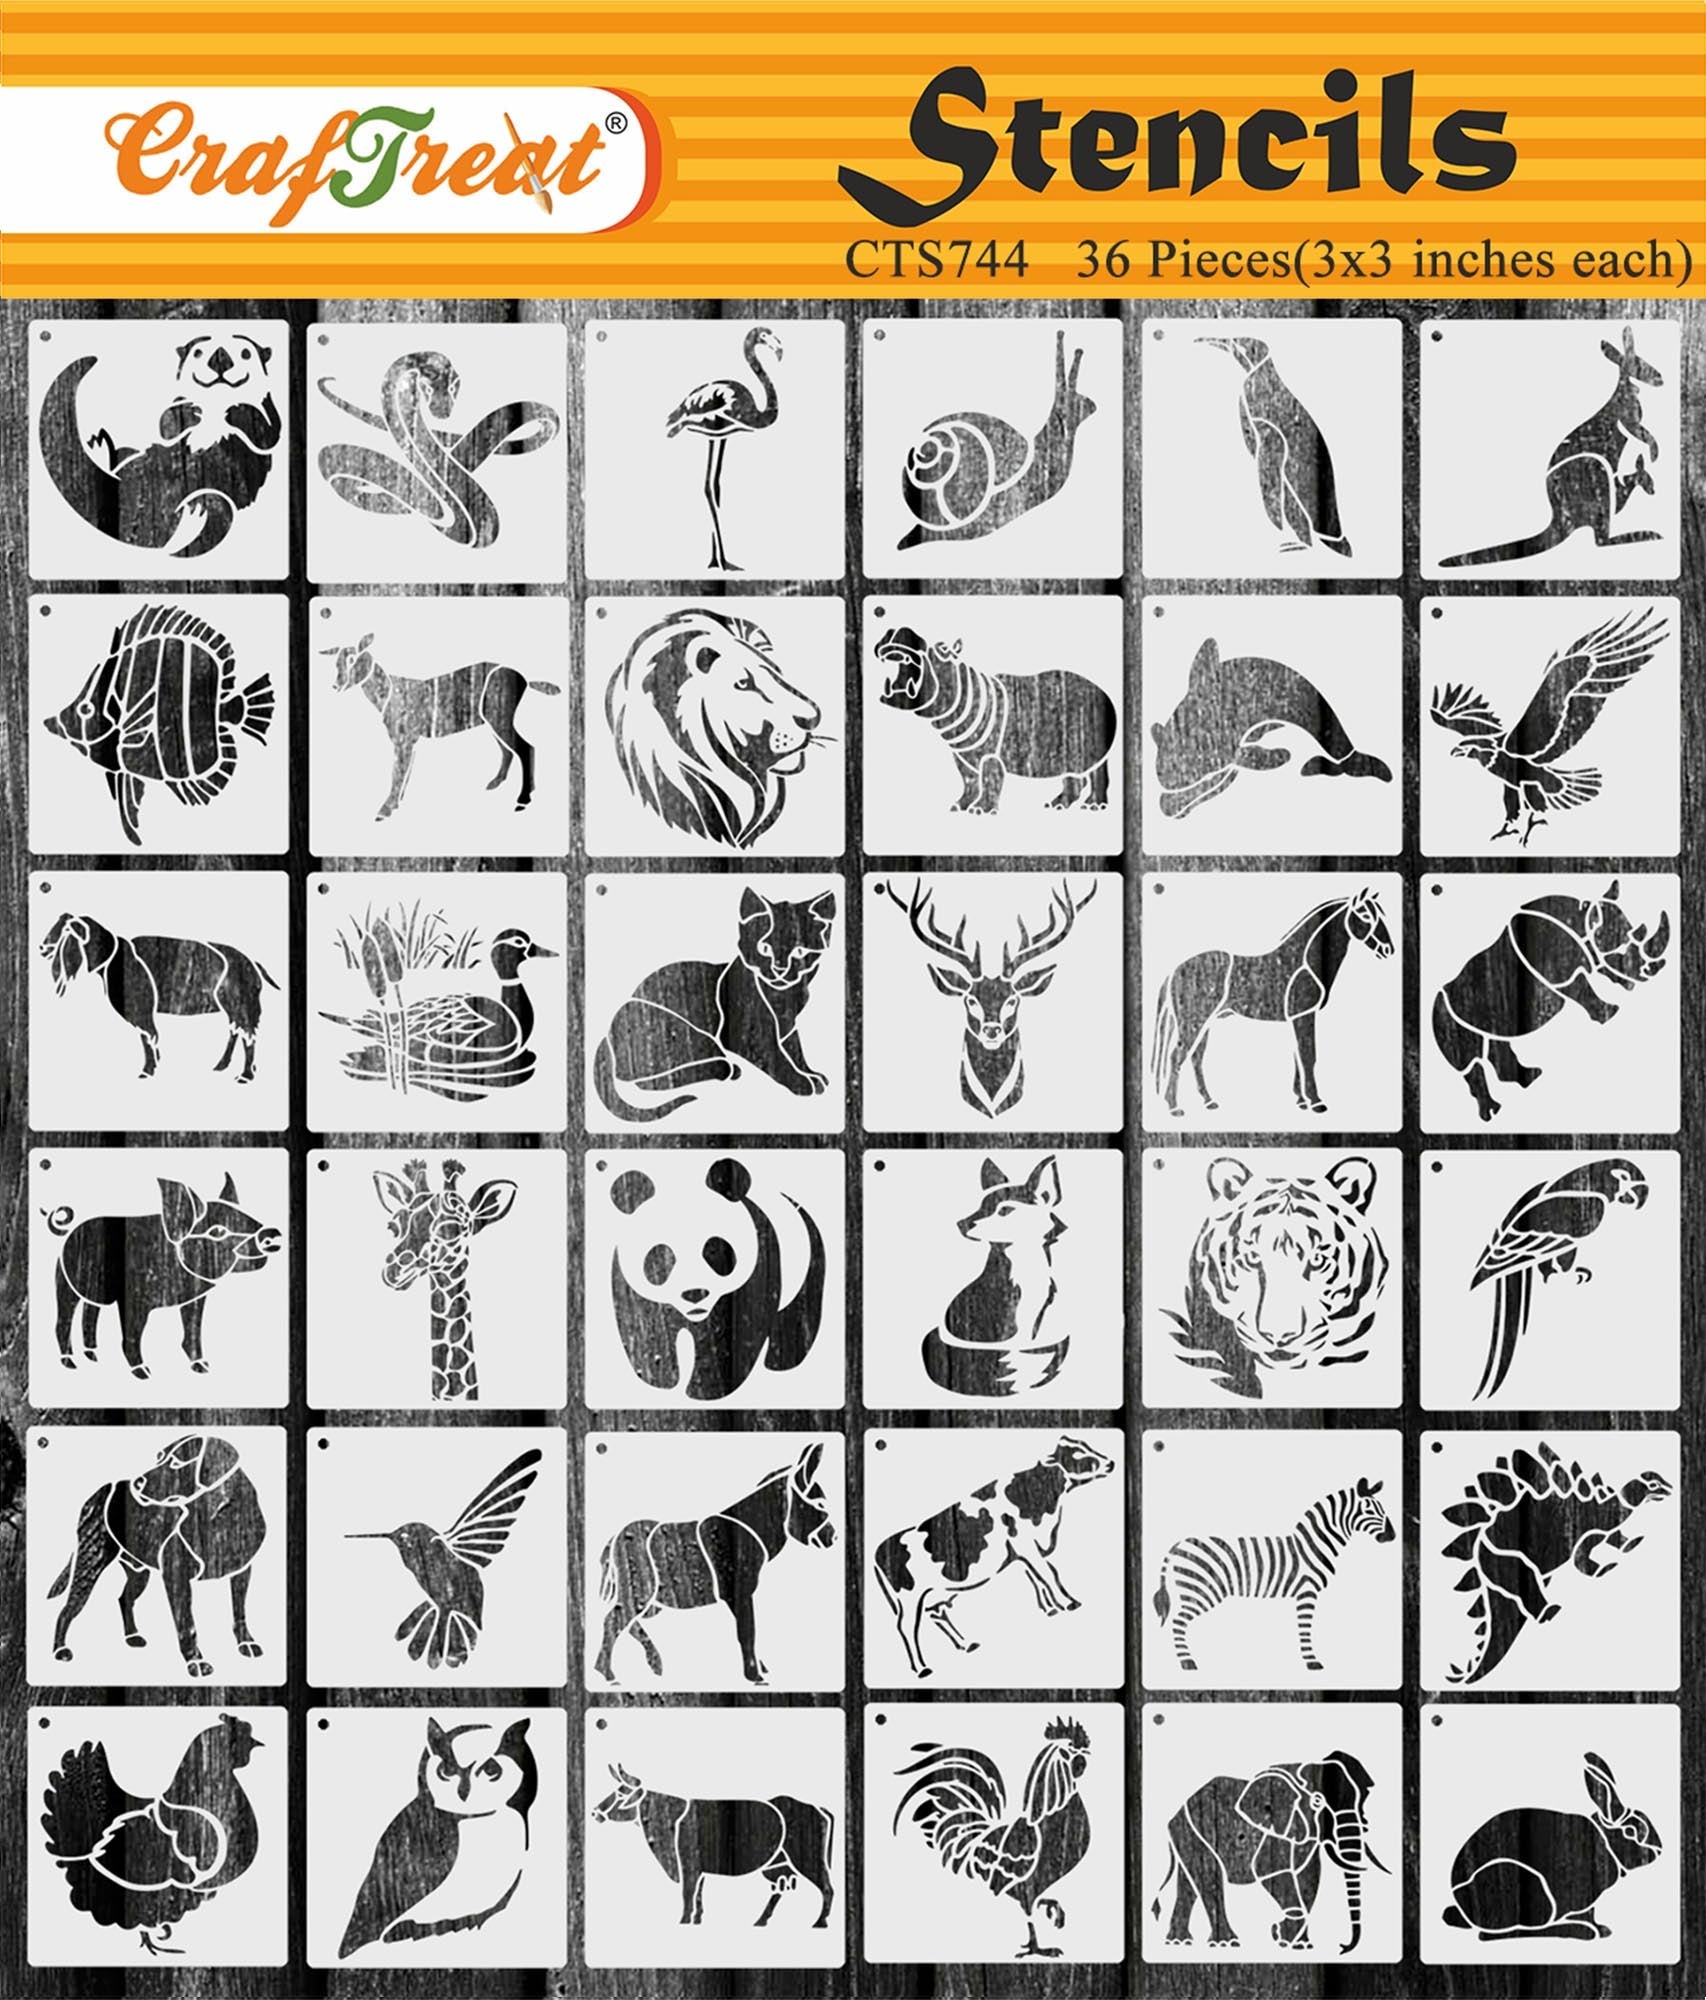 CrafTreat 36 Pieces Animal Stencil, Stencils for Painting on Wood, Elegant Stencils for Crafts, DIY Painting Stencils for Canvas, Reusable Stencils